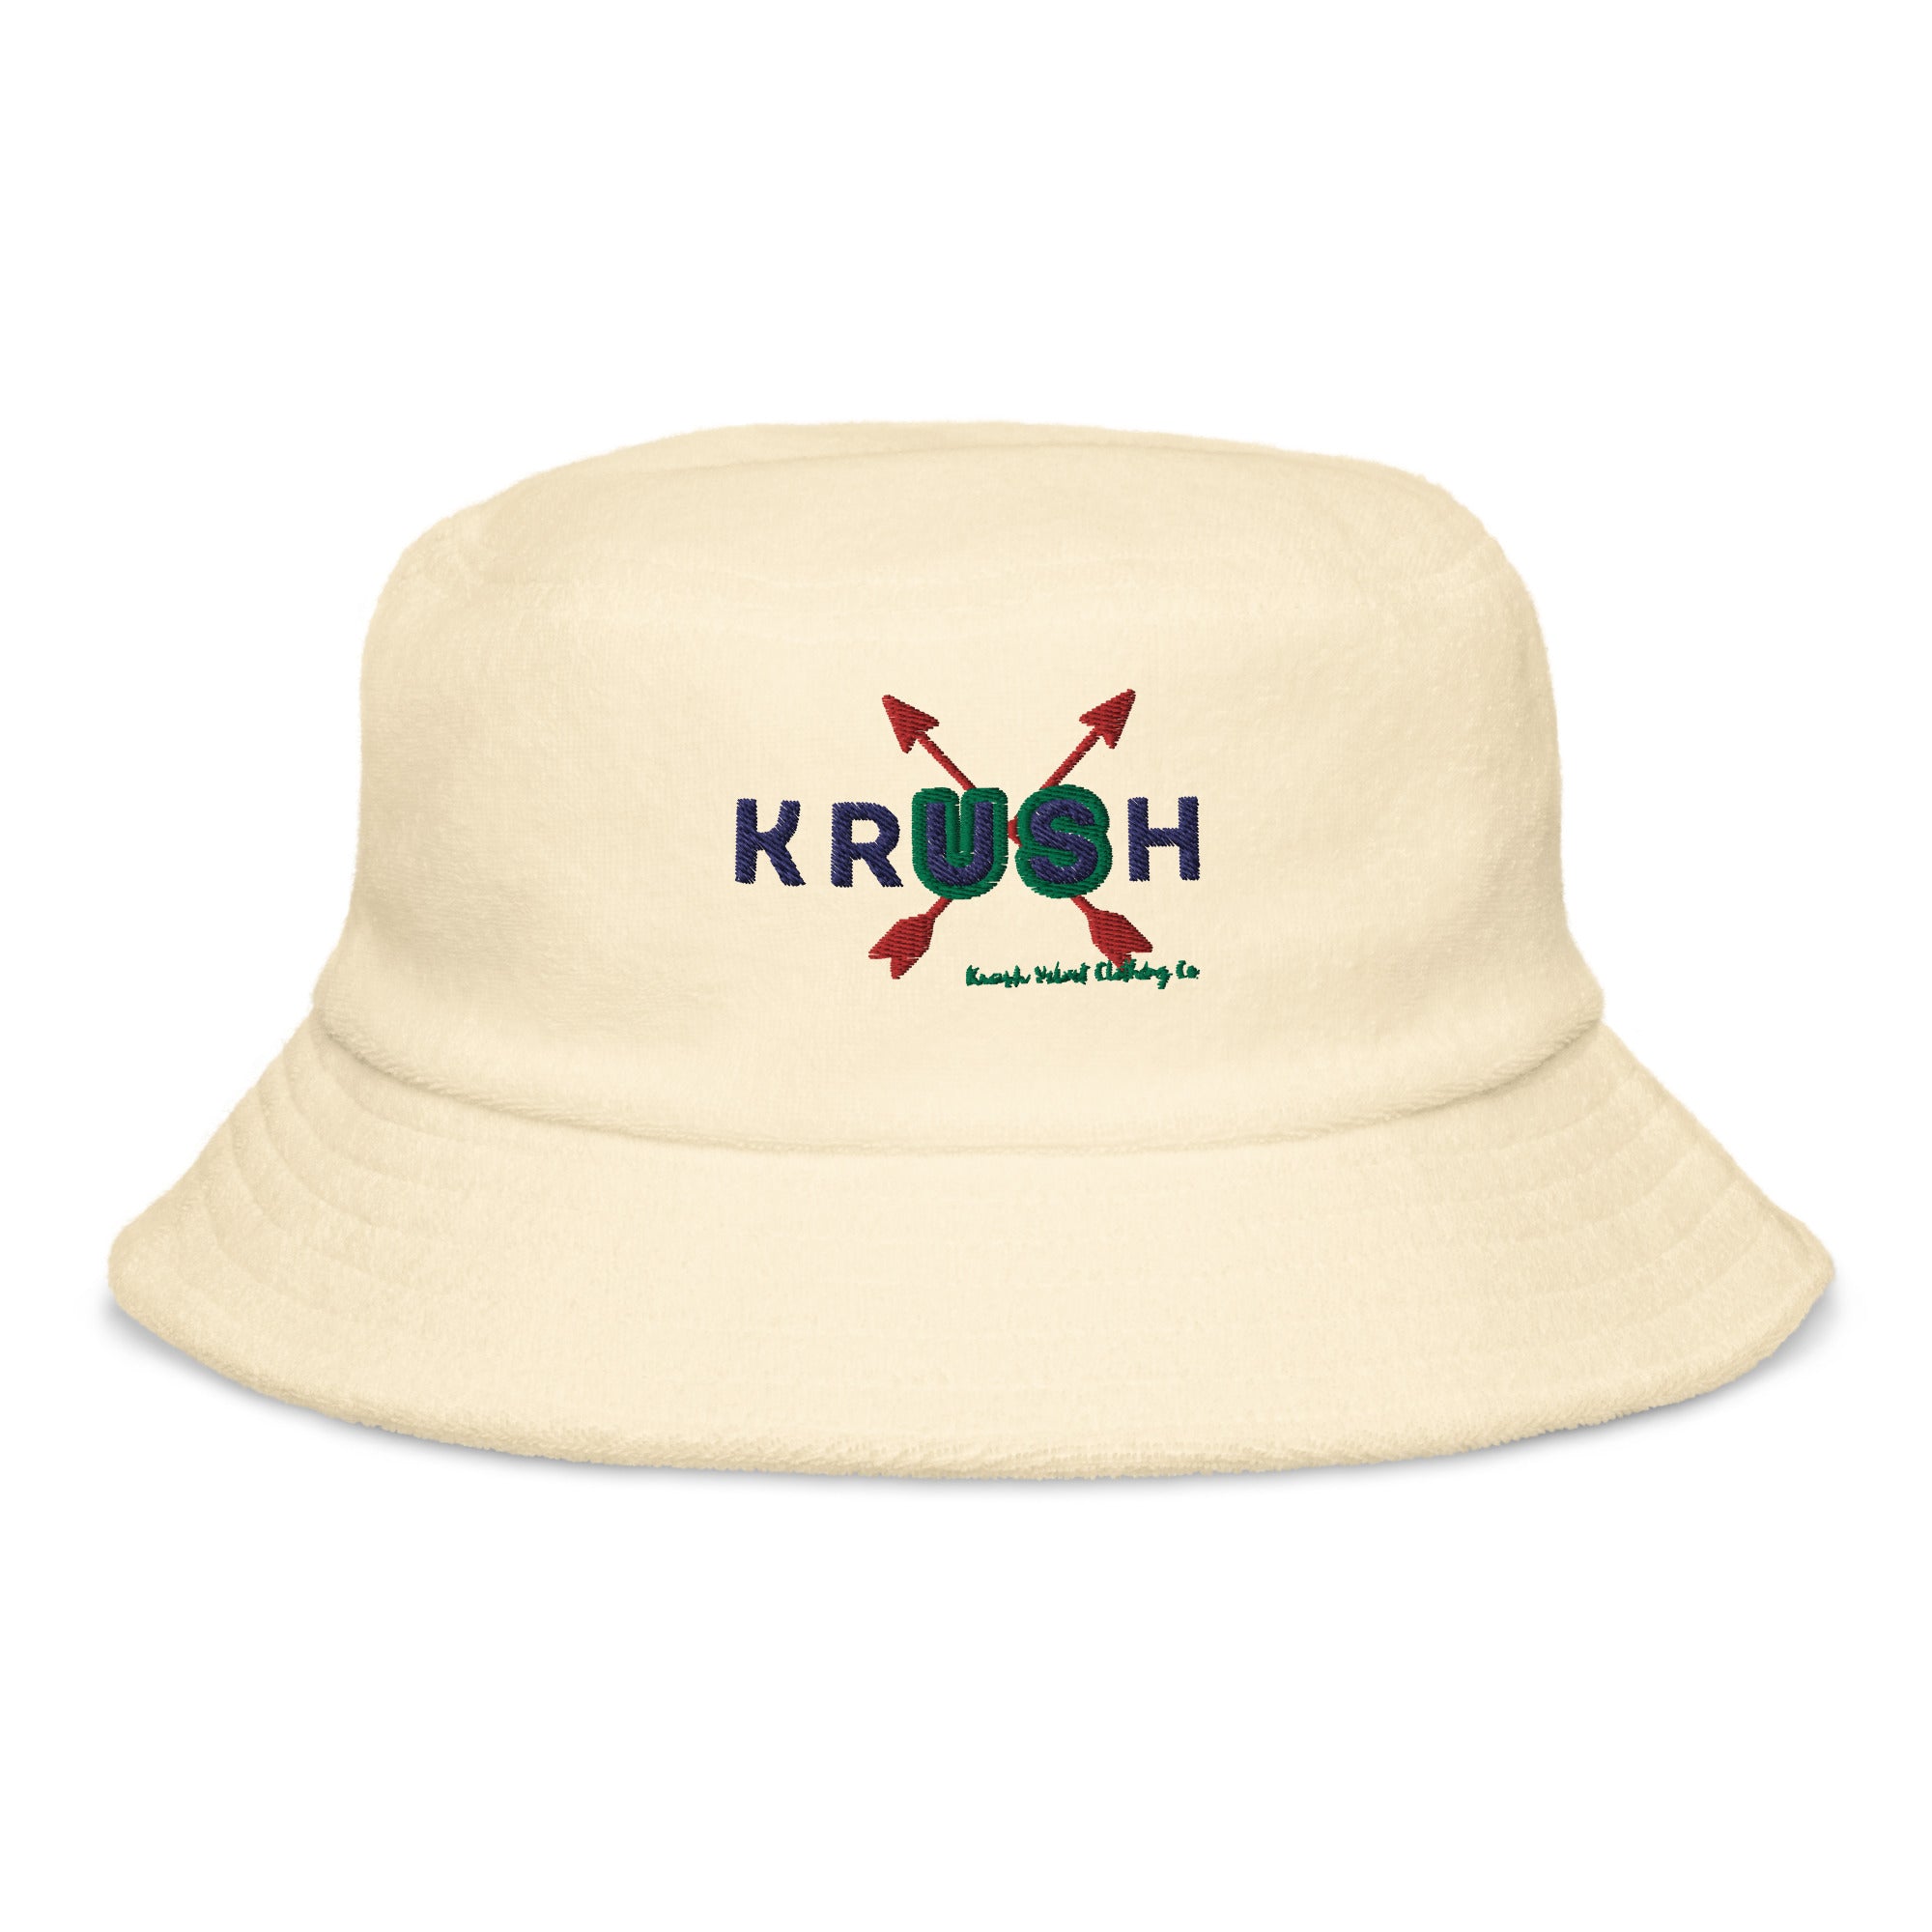 Krush bucket hat